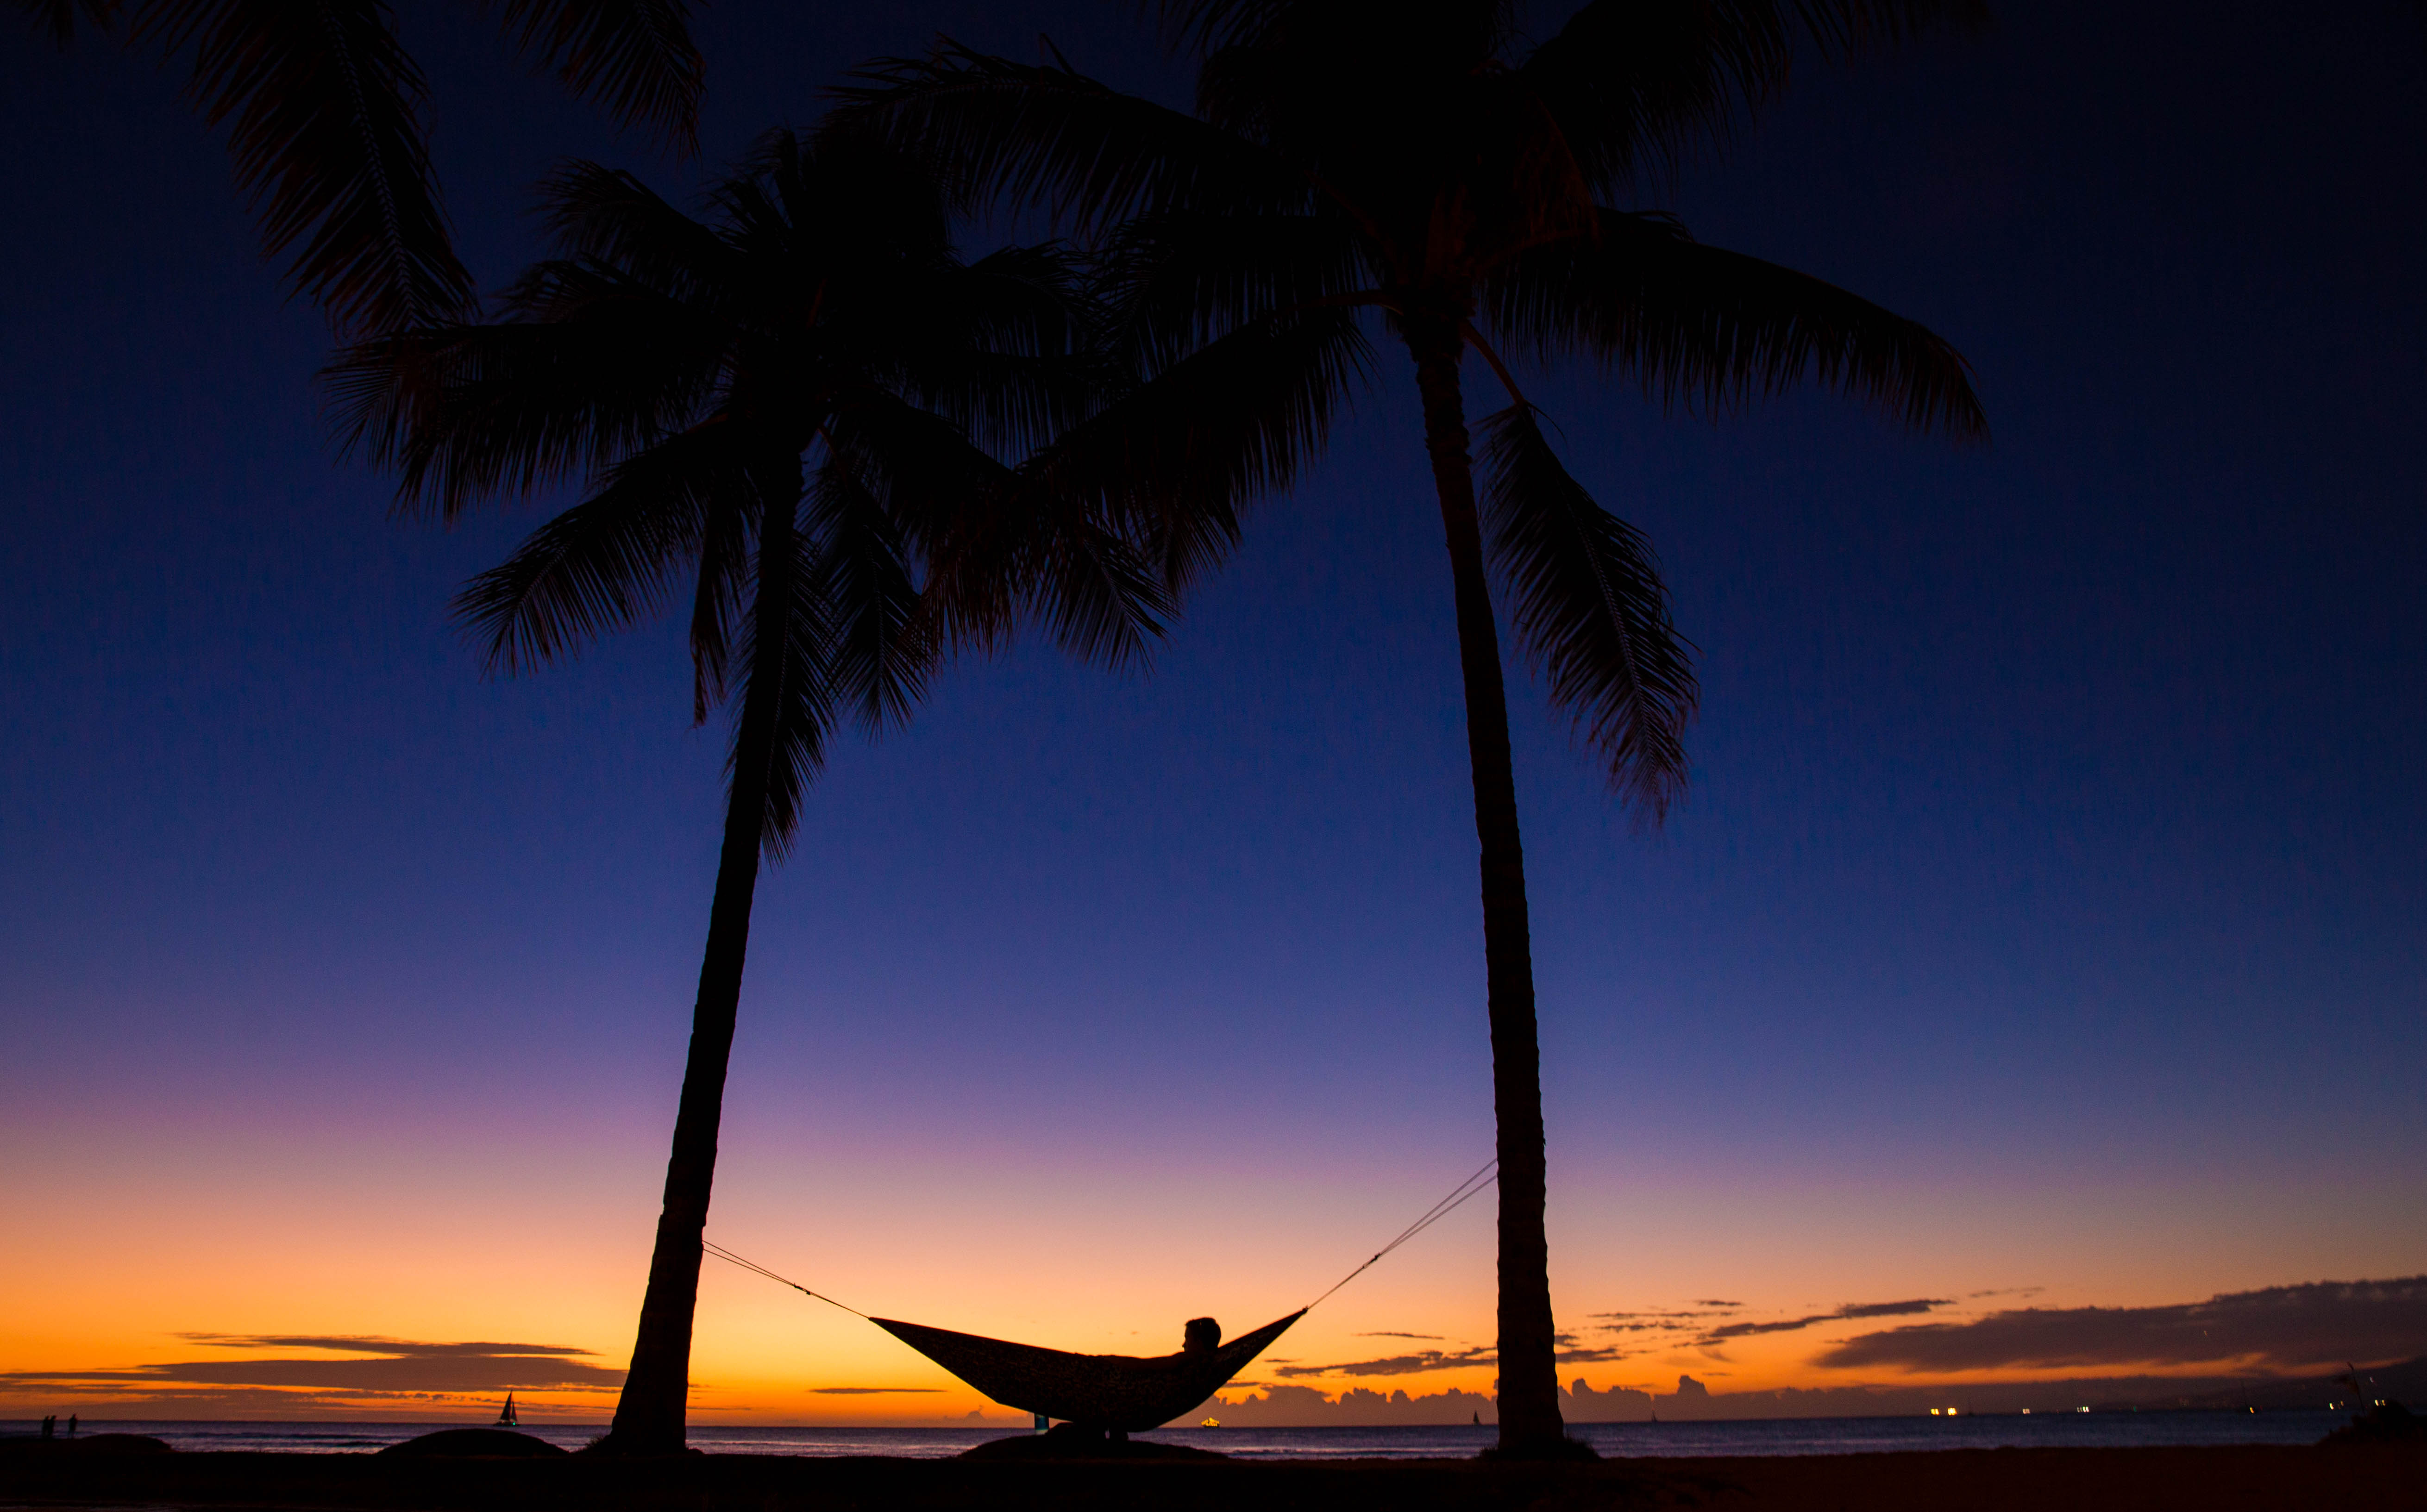 night, palms, dark, silhouettes, relaxation, rest, tropics, hammock